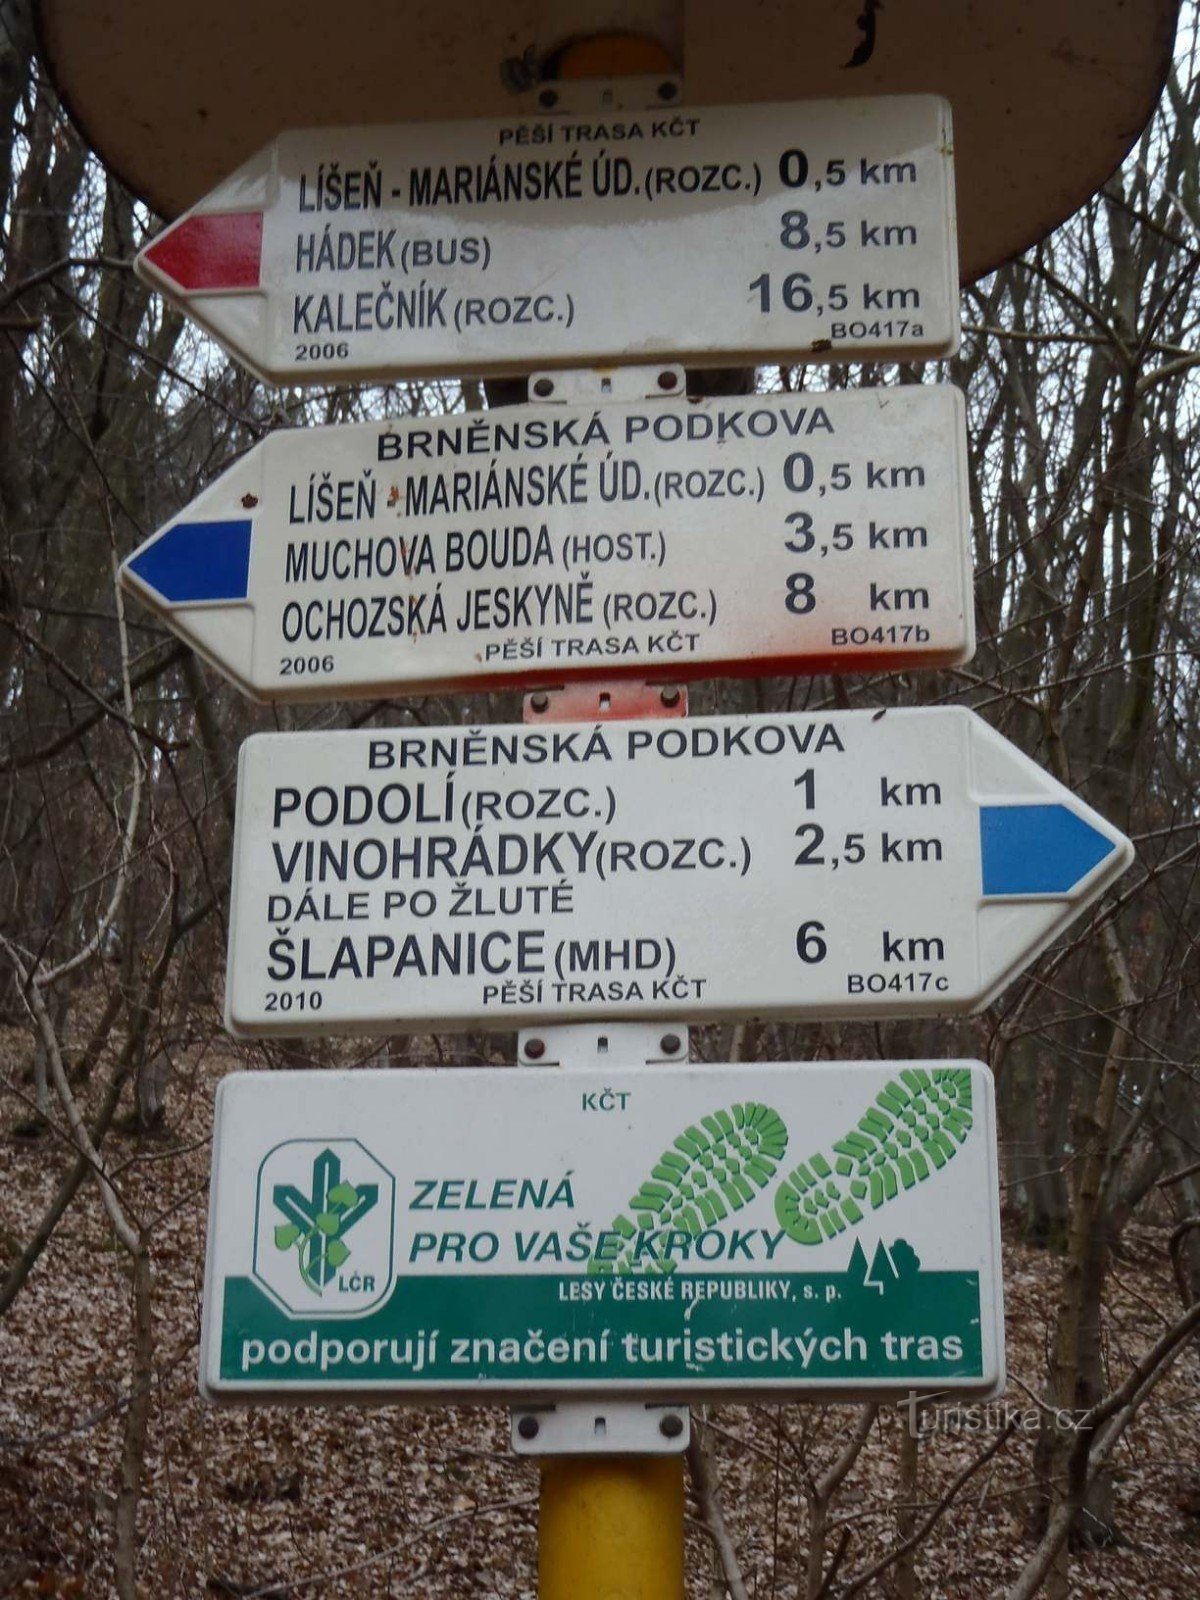 Tourist signpost Brno Líšeň Mariánské údolí Public transport - 6.2.2012 February XNUMX